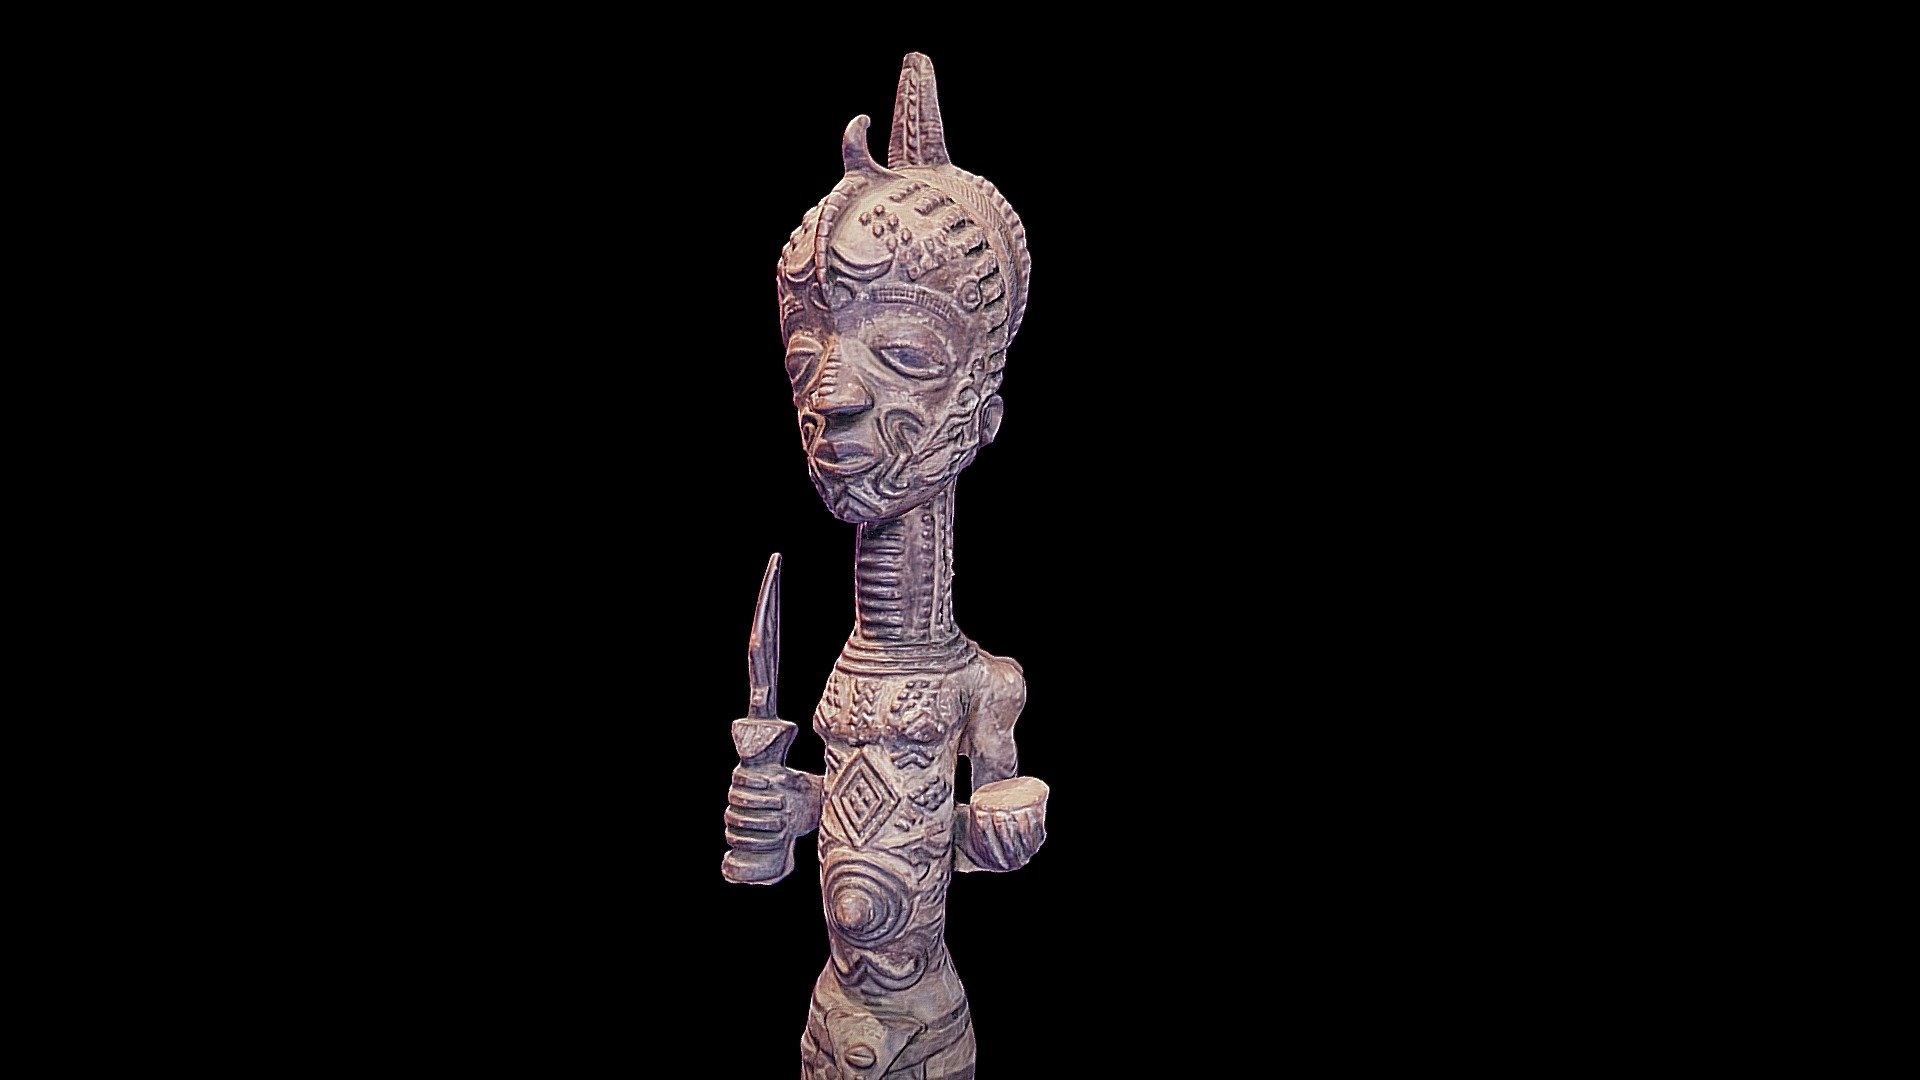 African wooden statue (African Museum of Tervuren - Belgium) - African statuette - Buy Royalty Free 3D model by LZ Creation (@jmch) 3d model